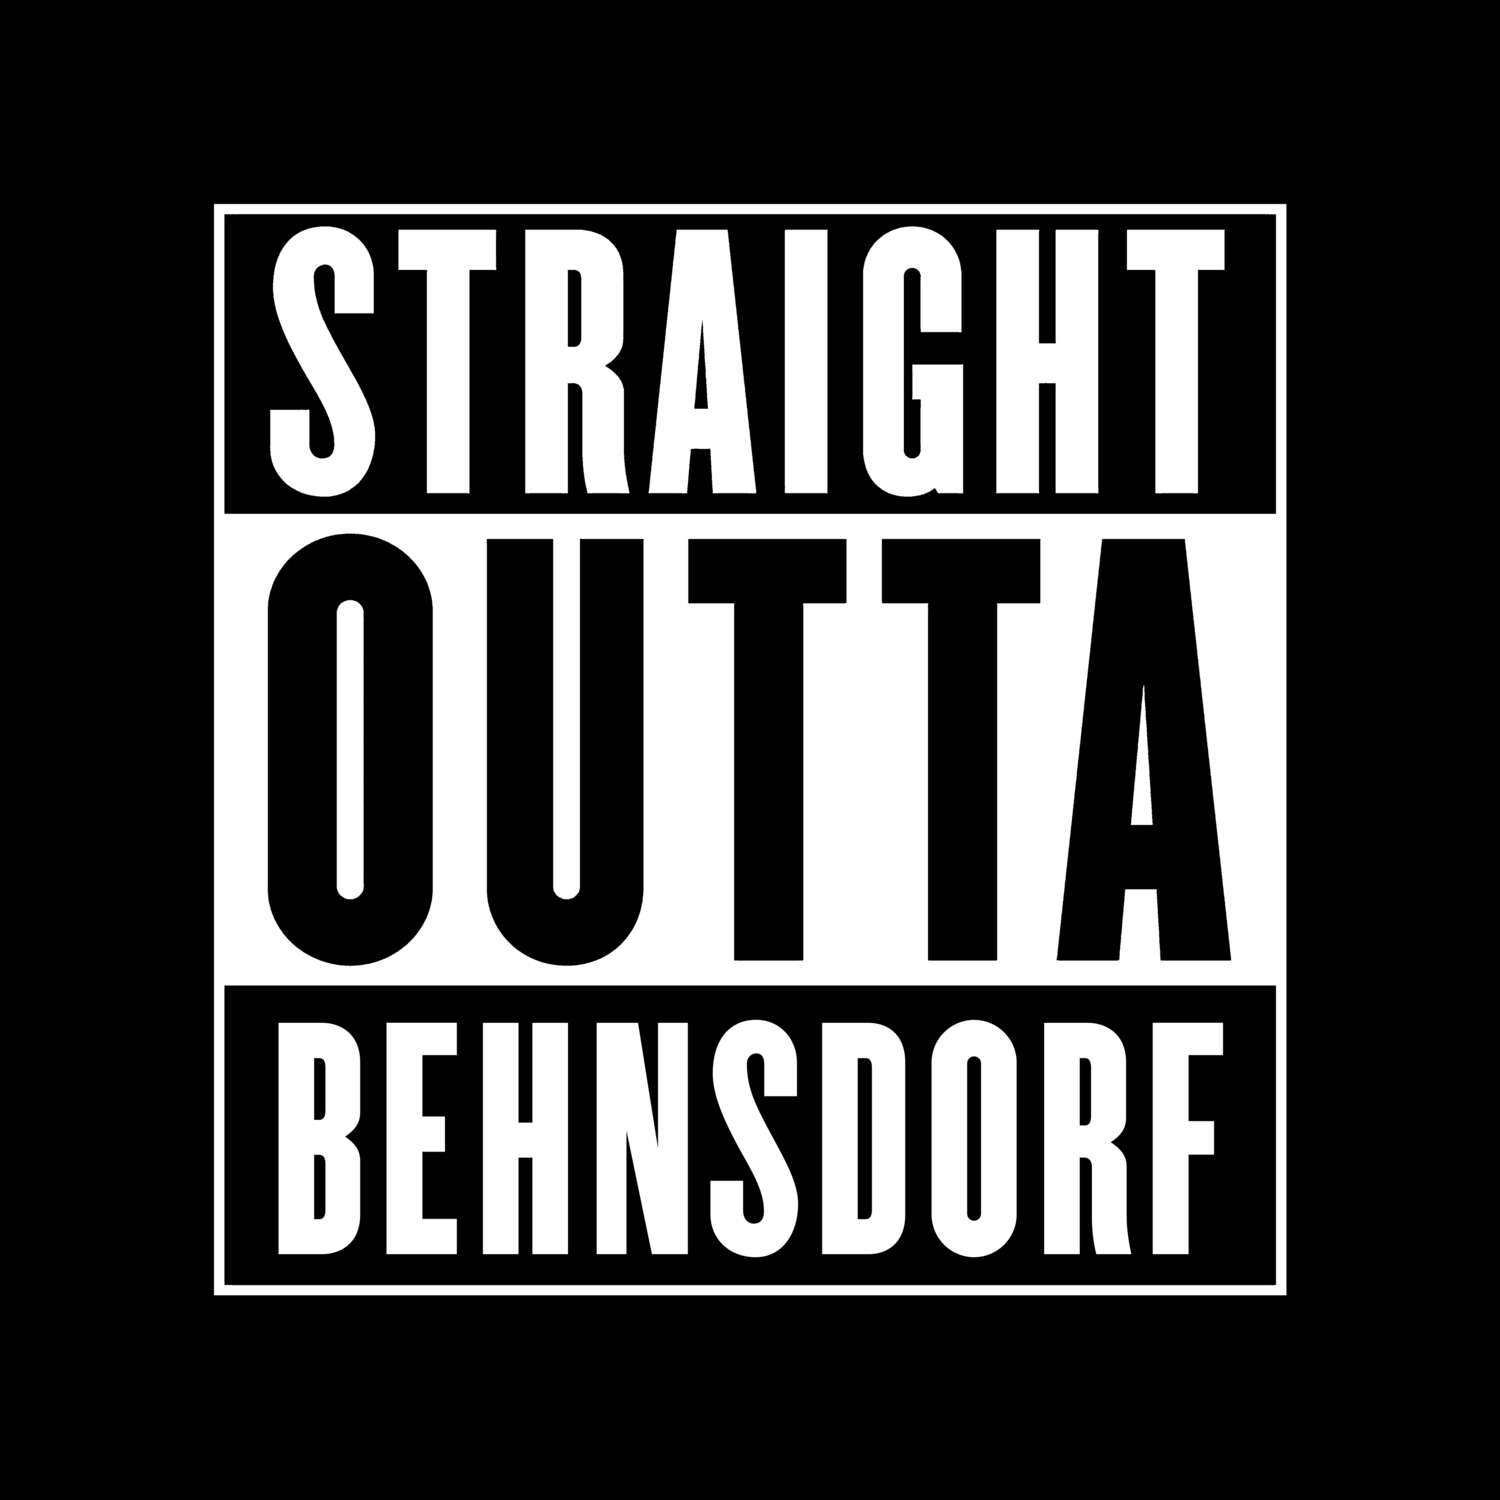 Behnsdorf T-Shirt »Straight Outta«